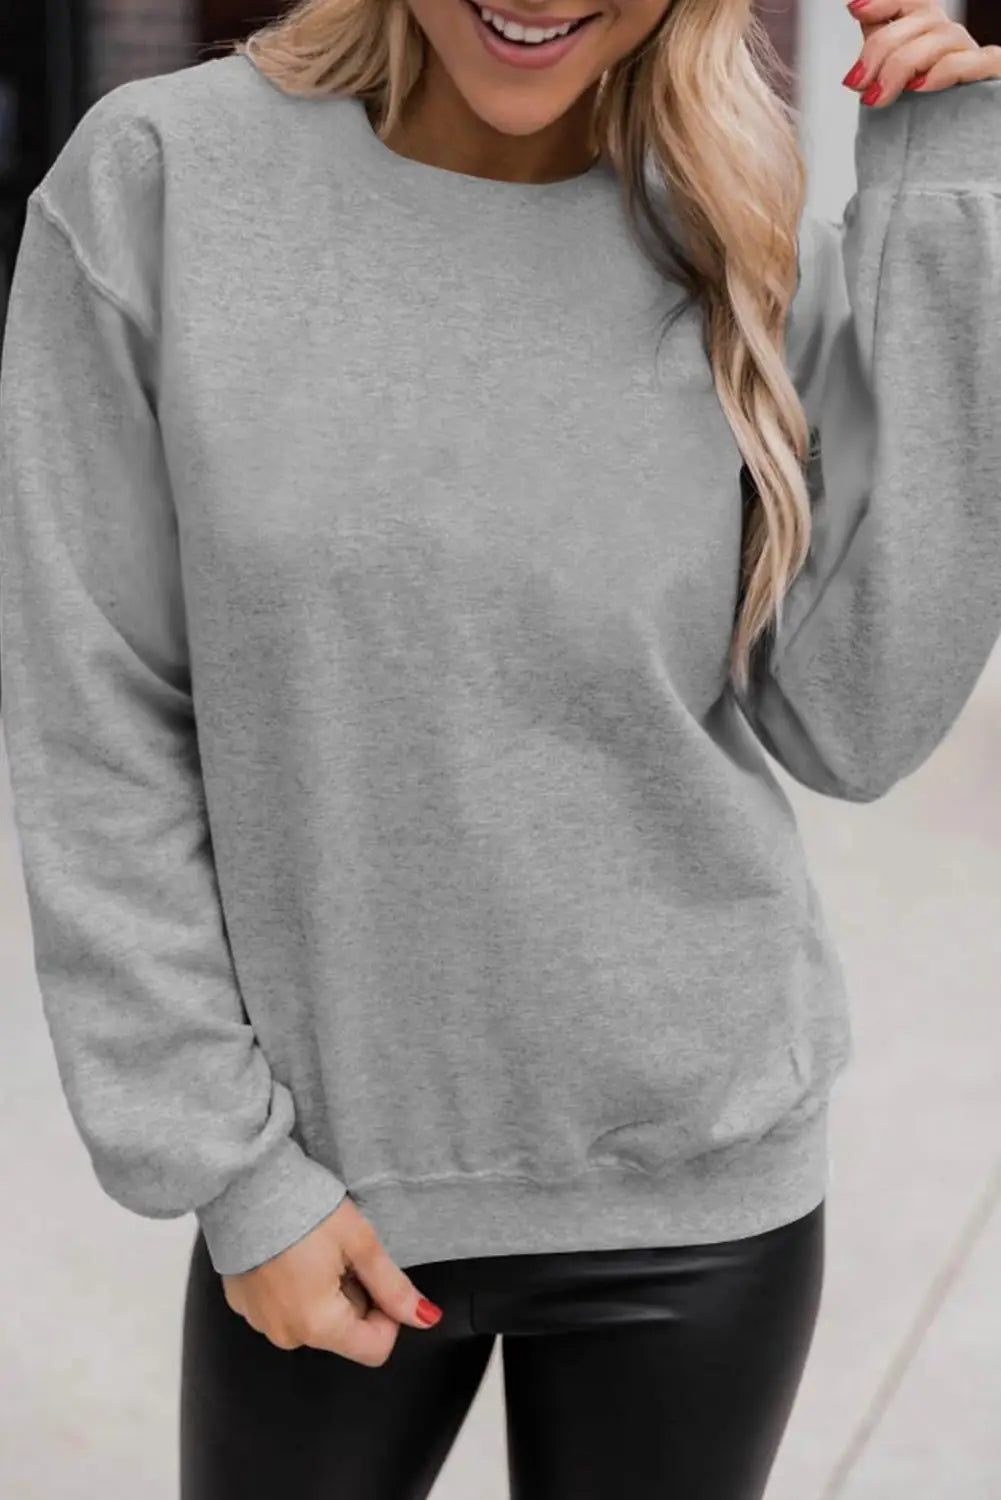 Beige solid classic crewneck pullover sweatshirt - gray / s / 50% polyester + 50% cotton - sweatshirts & hoodies